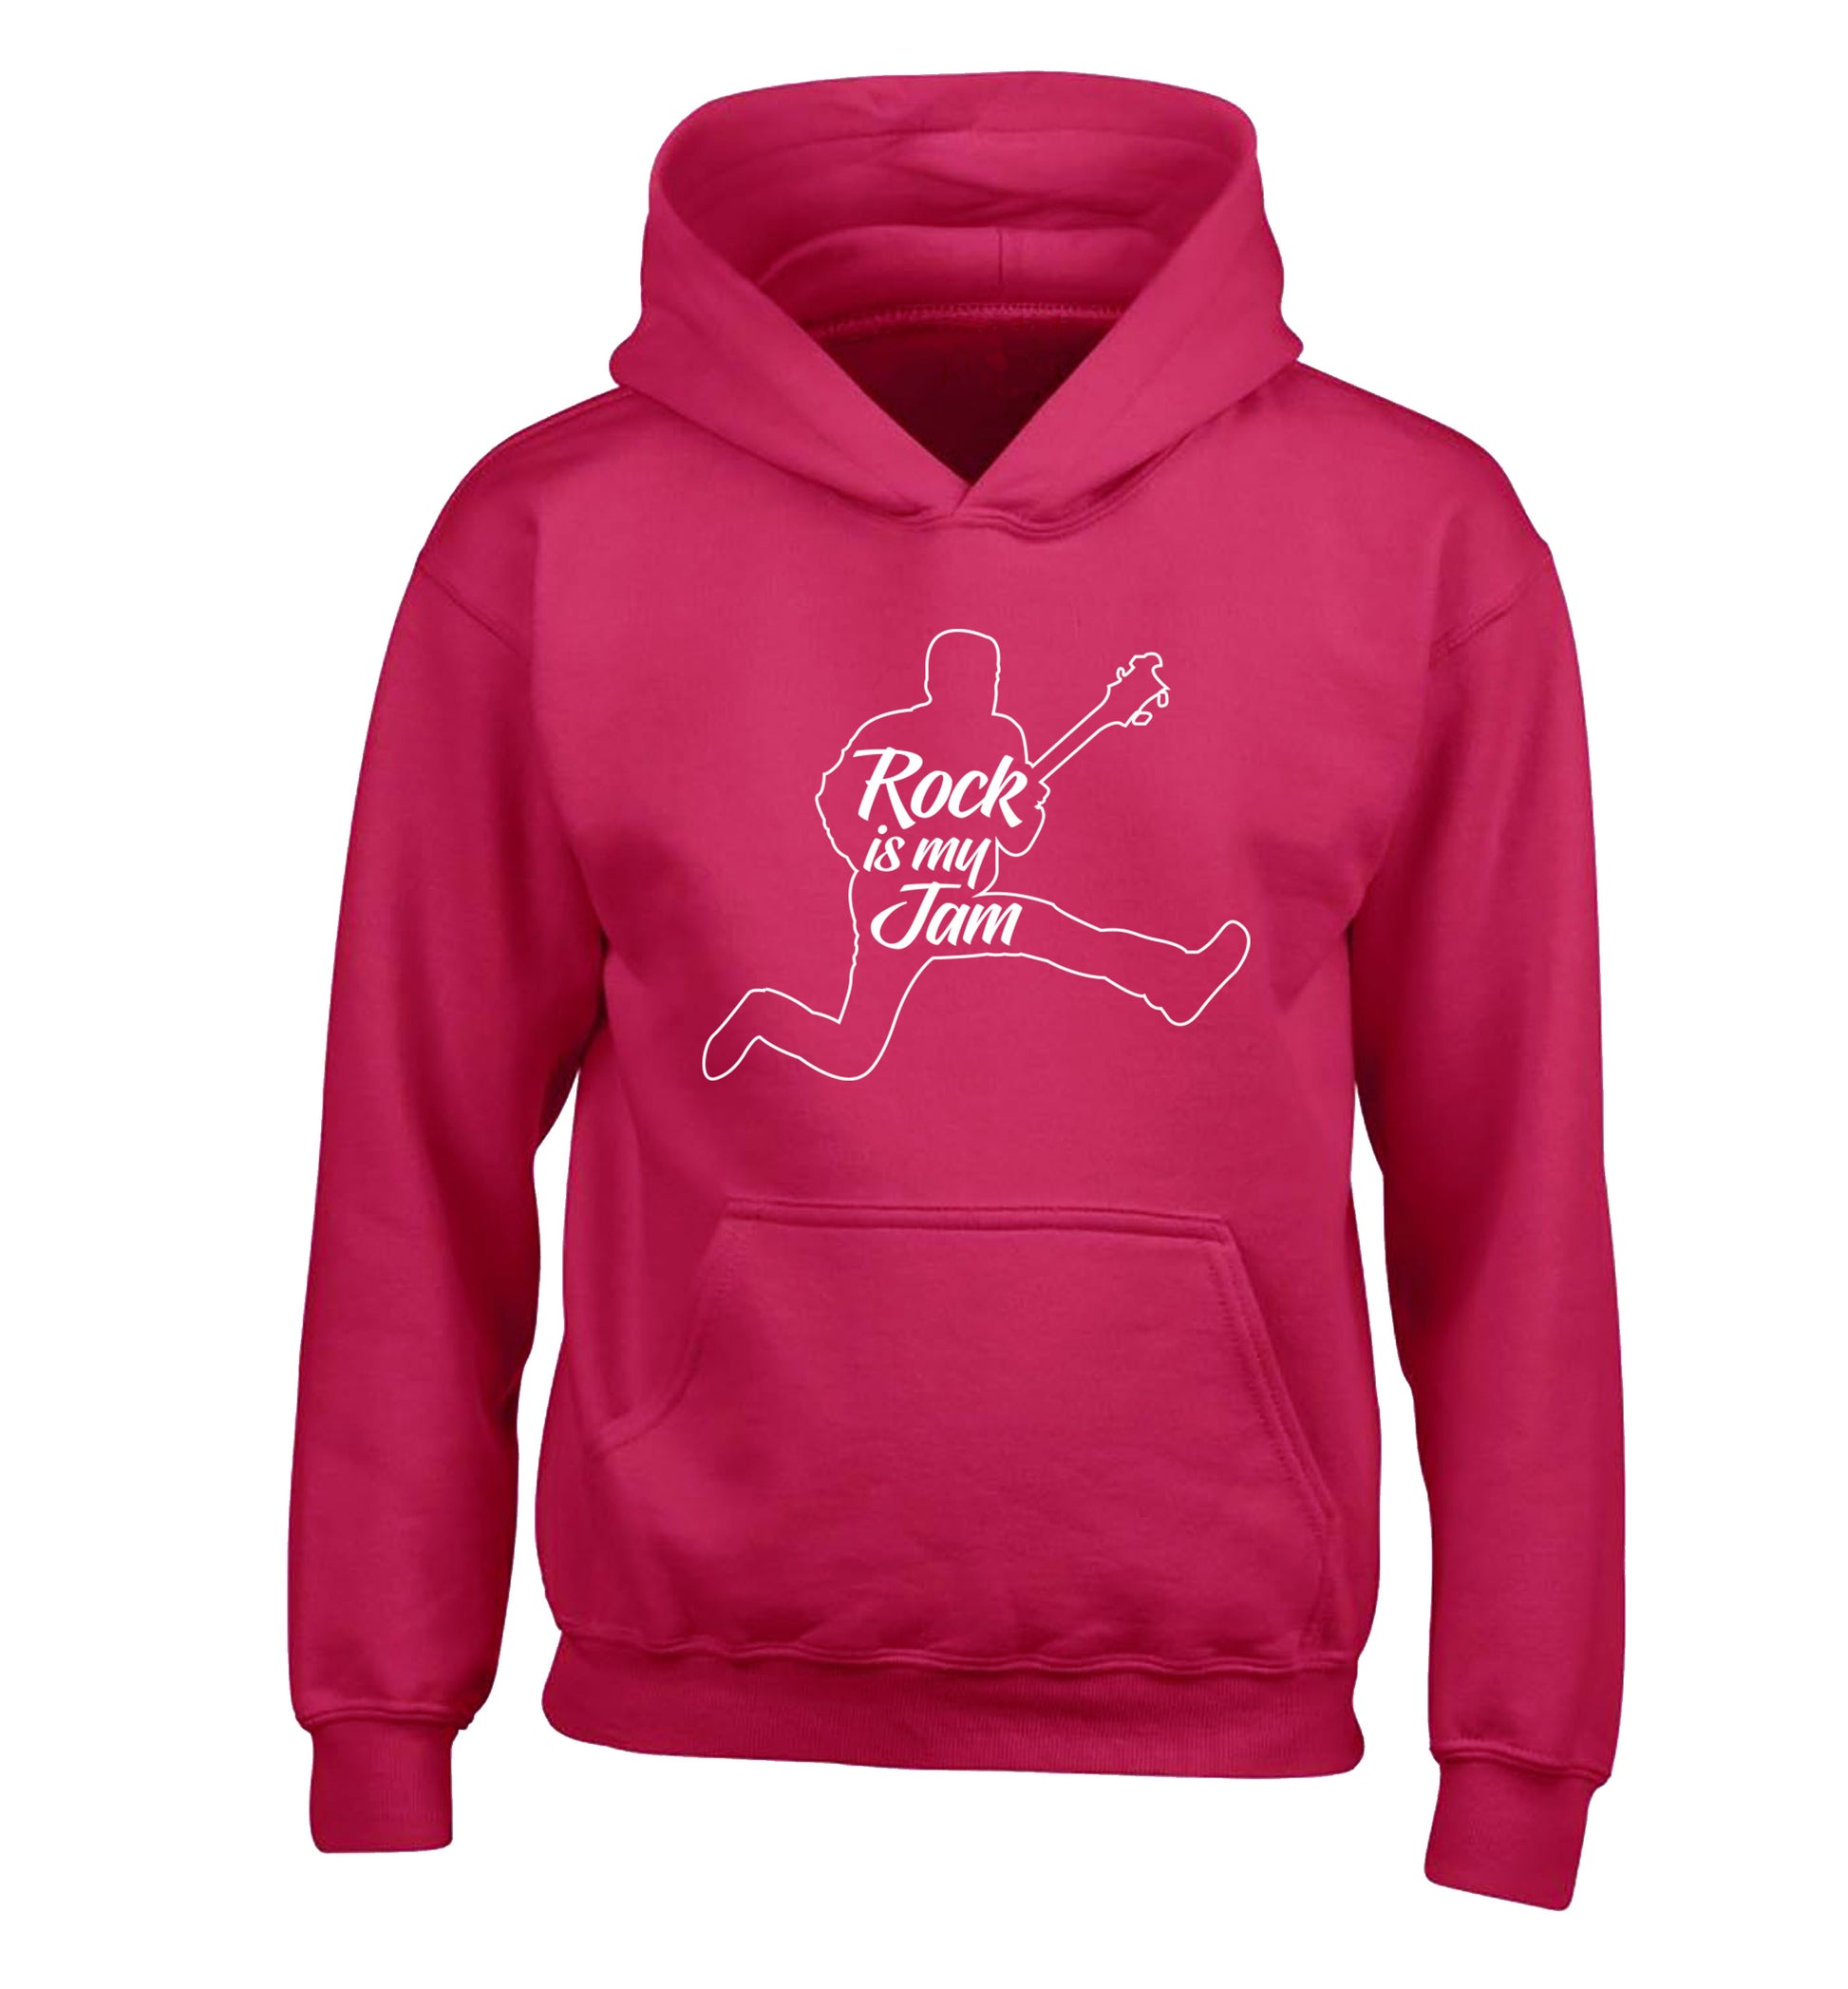 Rock is my jam children's pink hoodie 12-13 Years